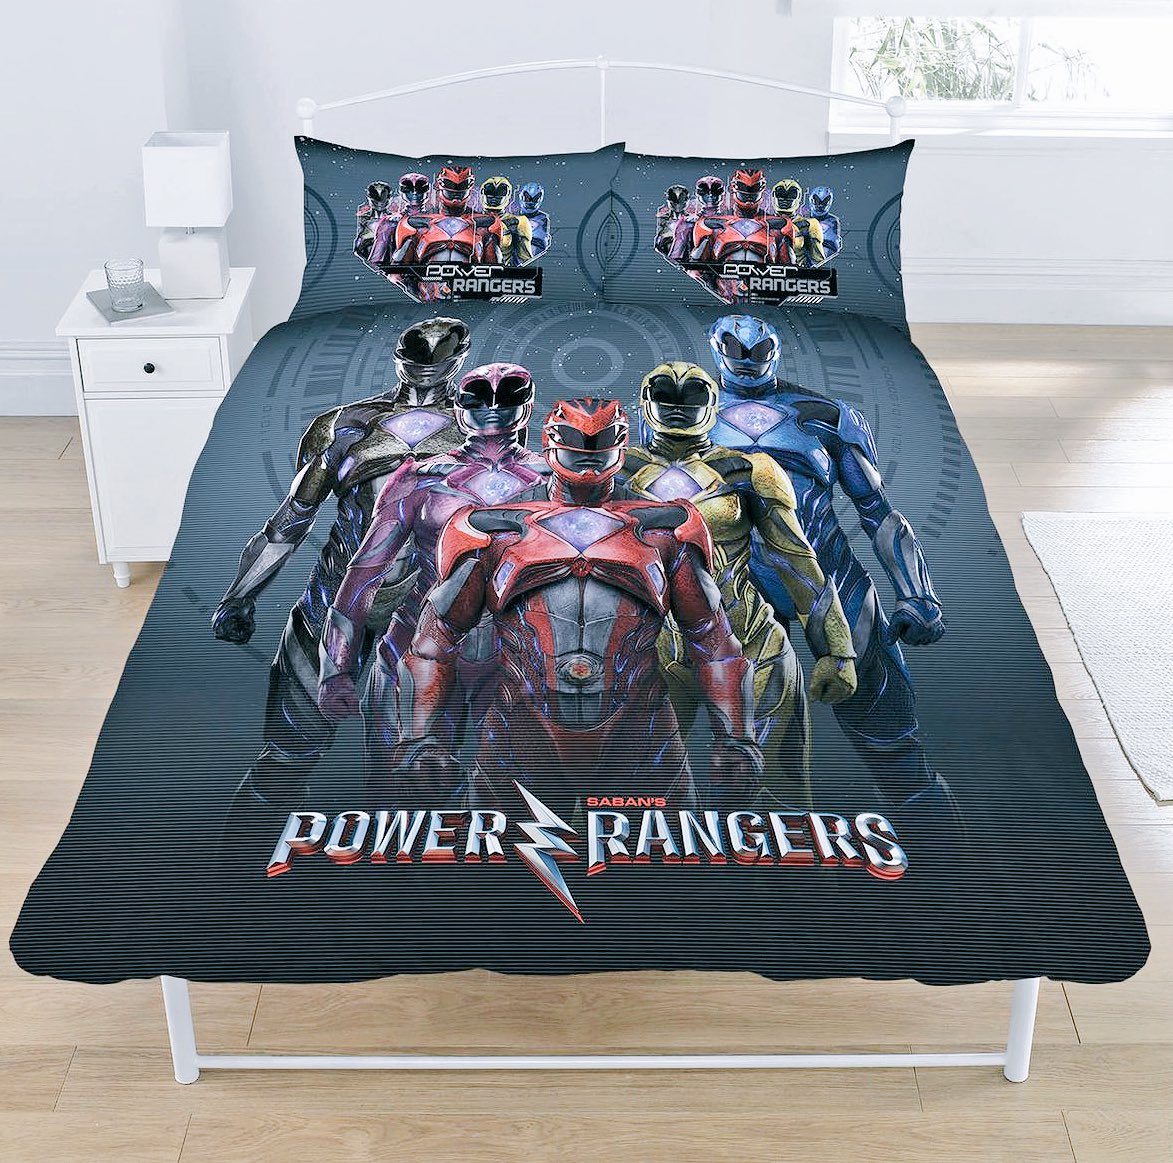 Power Rangers Now On Twitter Powerrangersmovie Bed Sheets